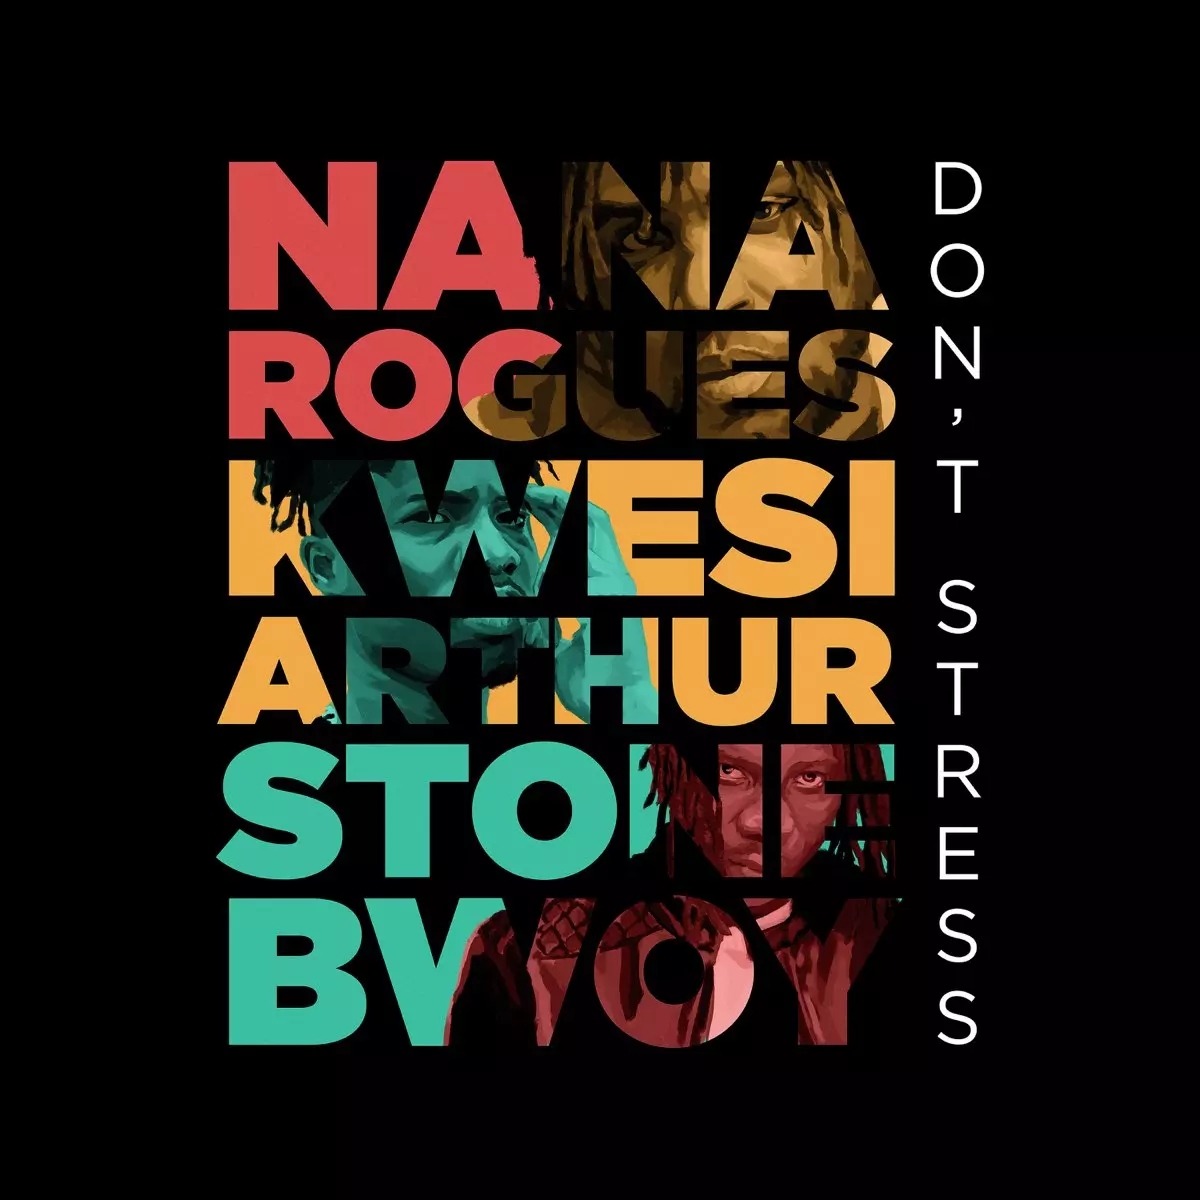 Don't Stress - Single by Nana Rogues, Kwesi Arthur & Stonebwoy on Apple Music